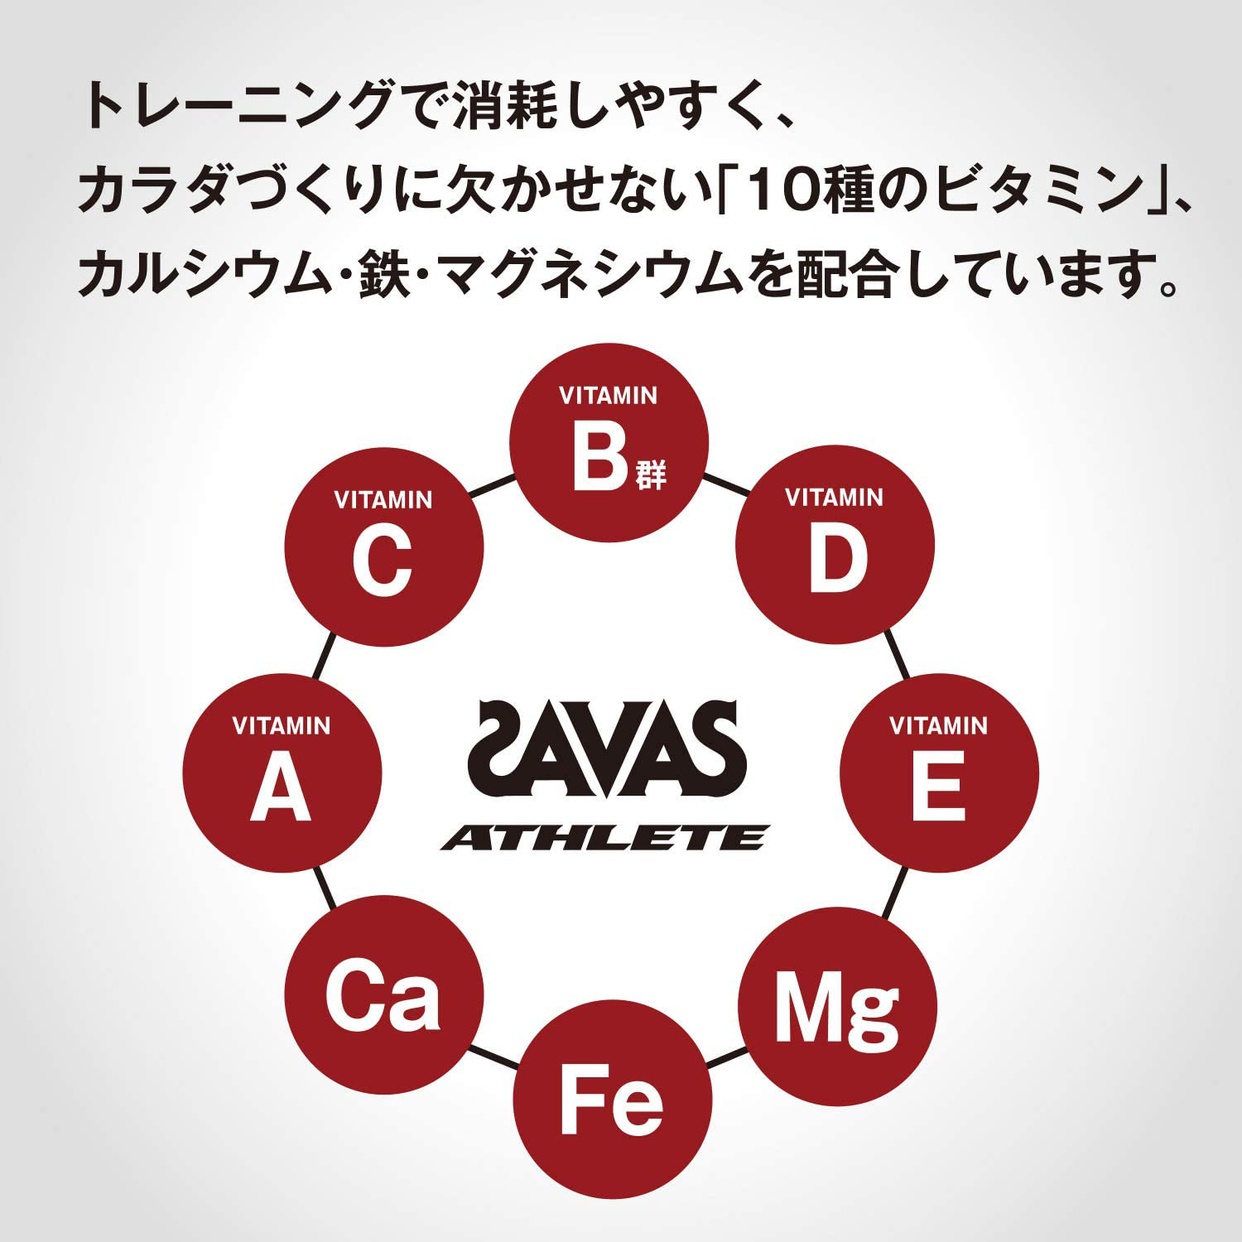 SAVAS(ザバス) アスリート ウエイト アップの商品画像5 